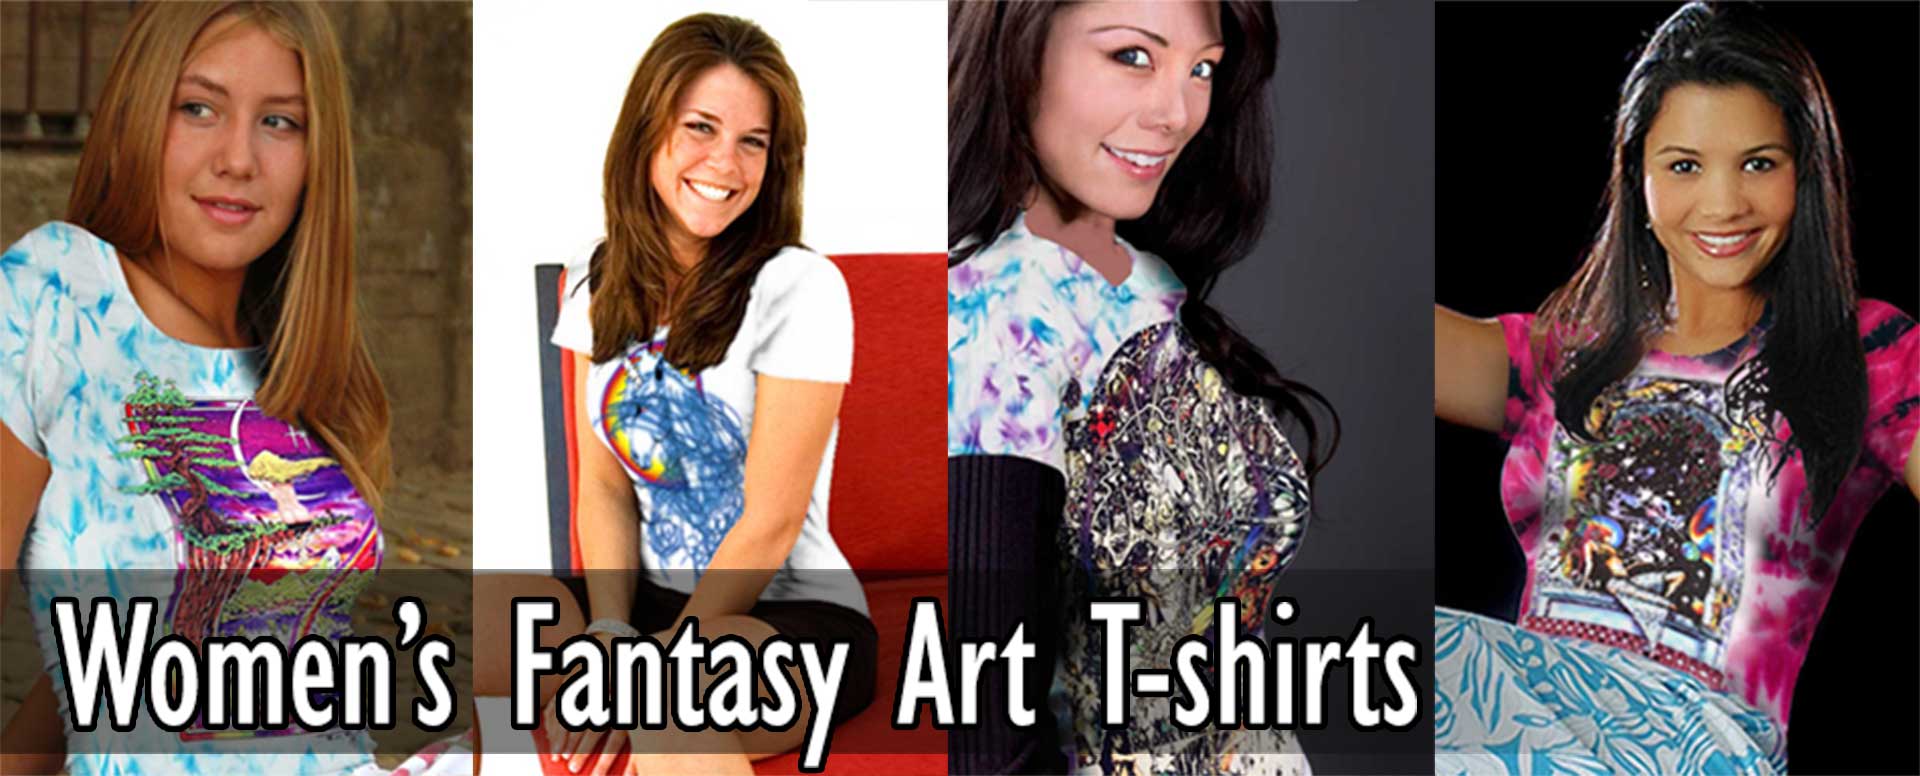 Women's Fantasy Art T-shirts